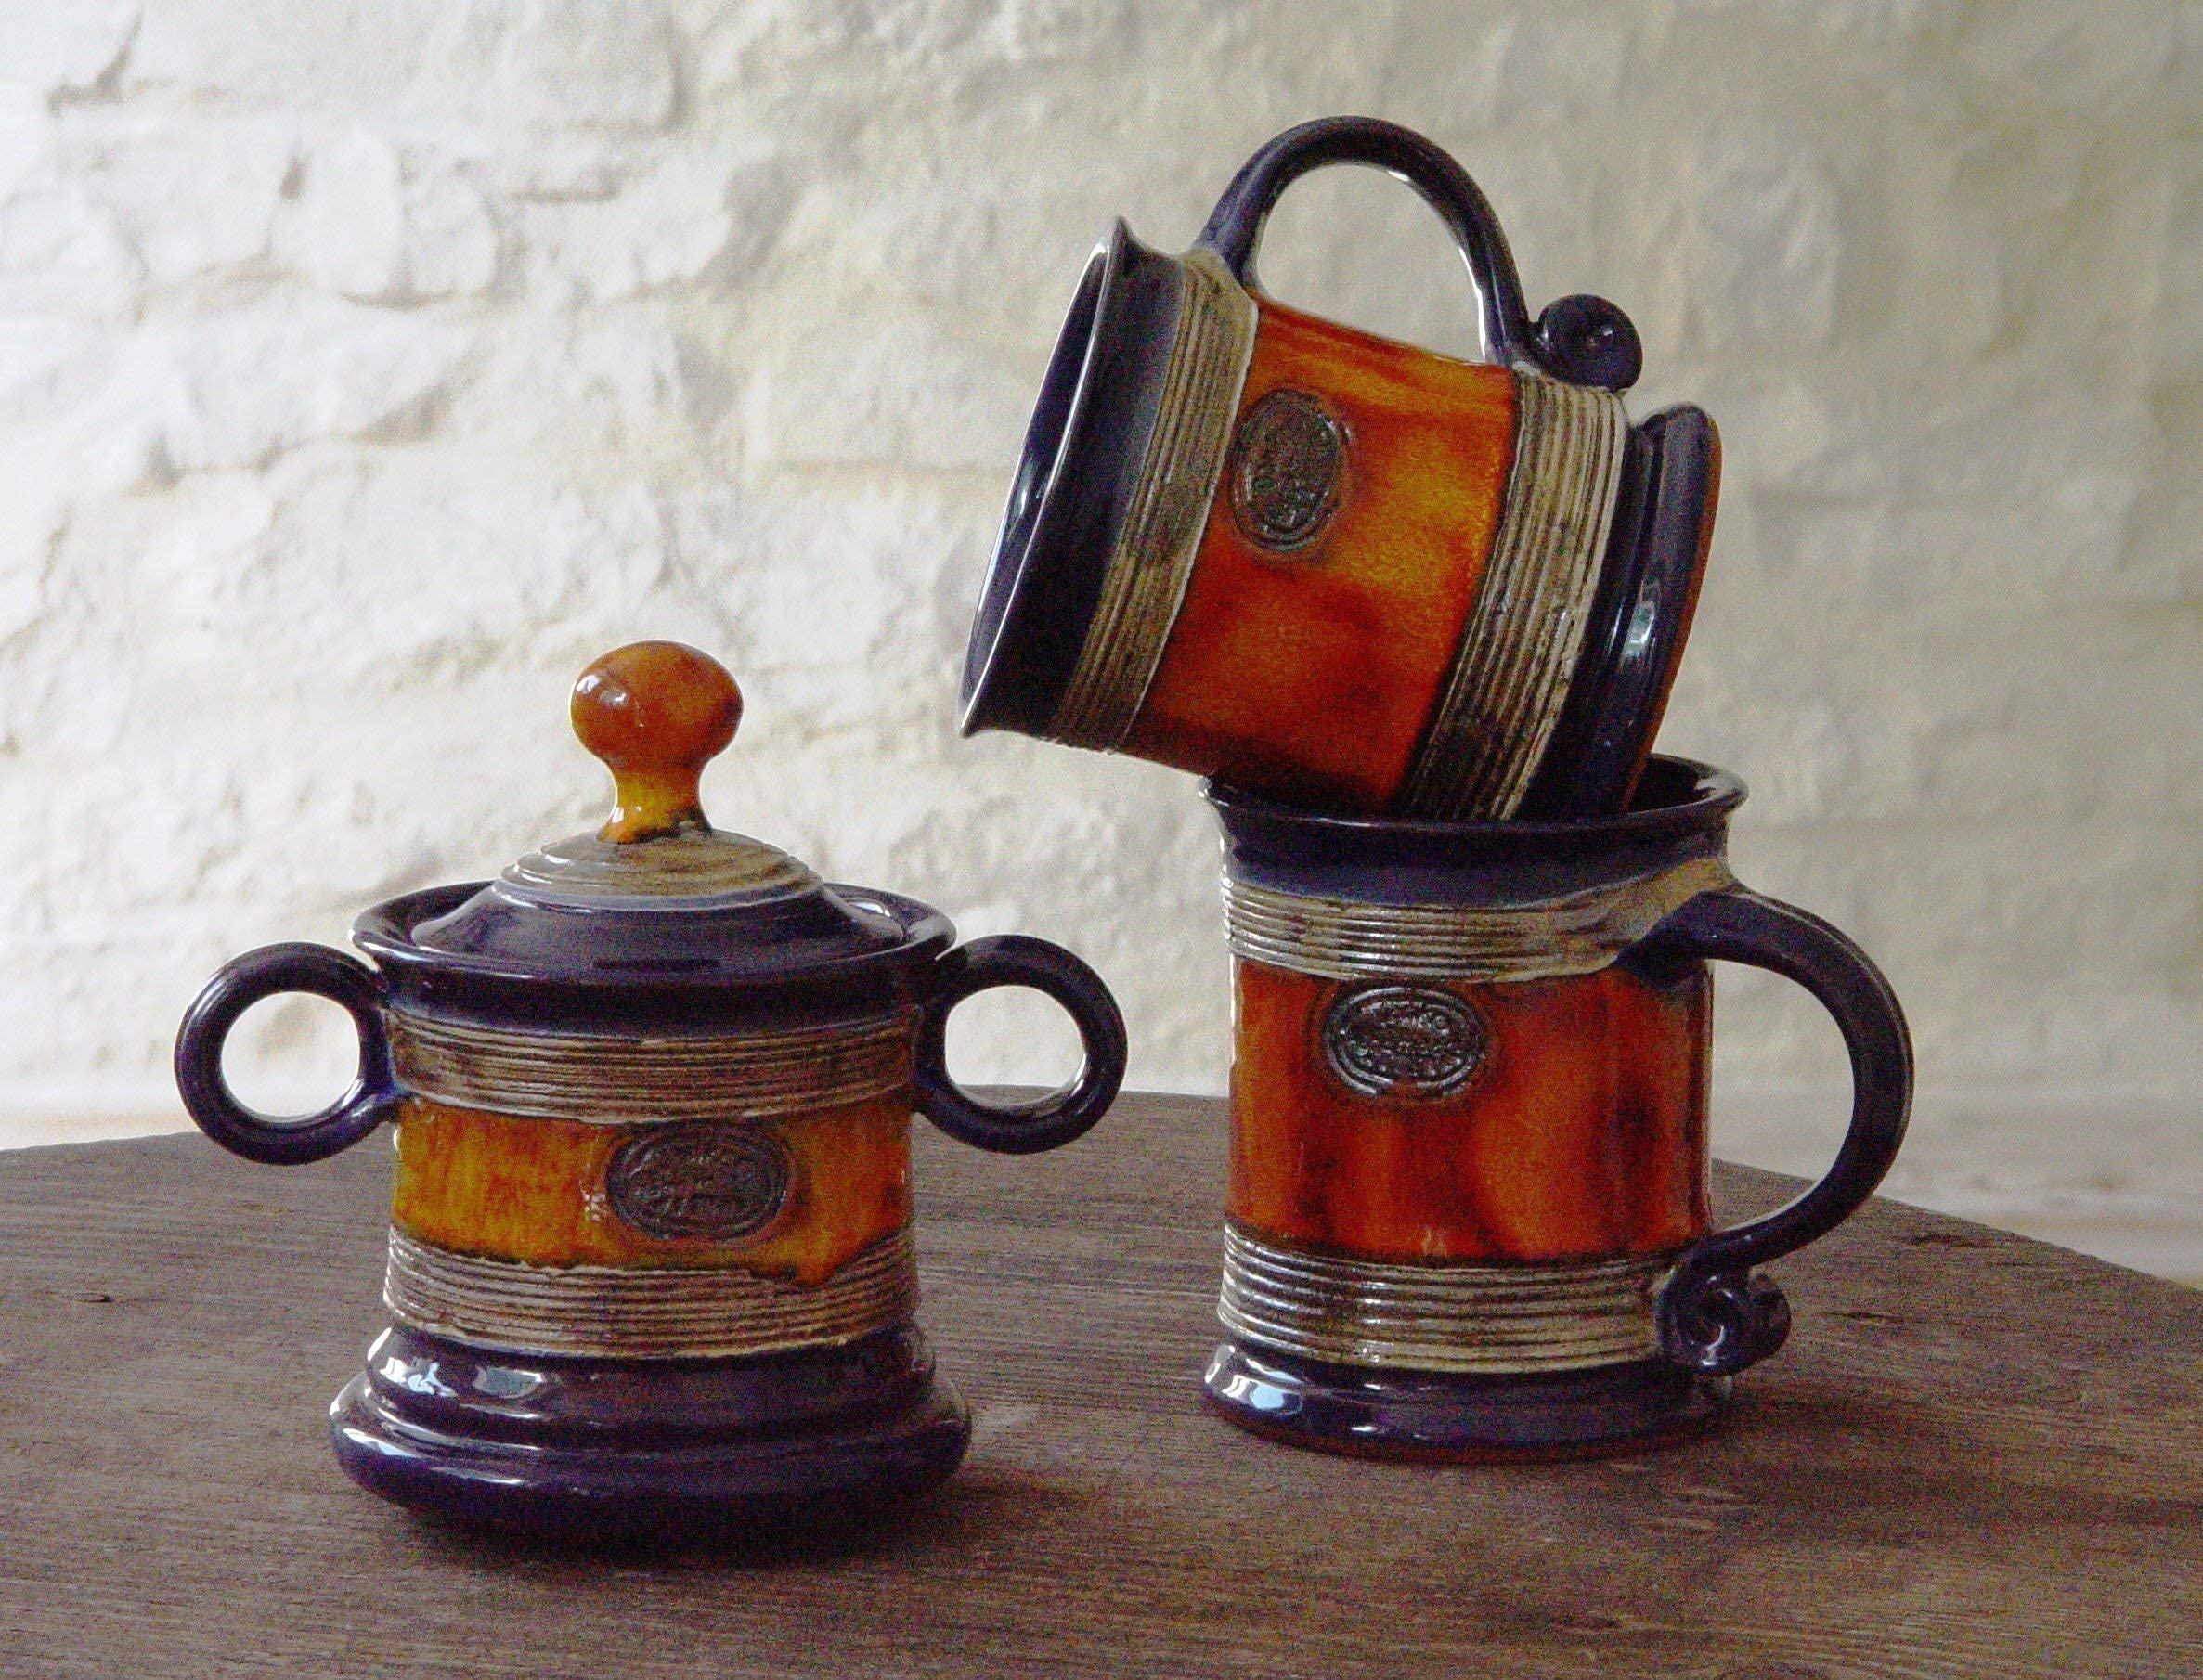 Blue and Orange Wheel Thrown Pottery Coffee or Tea Mug